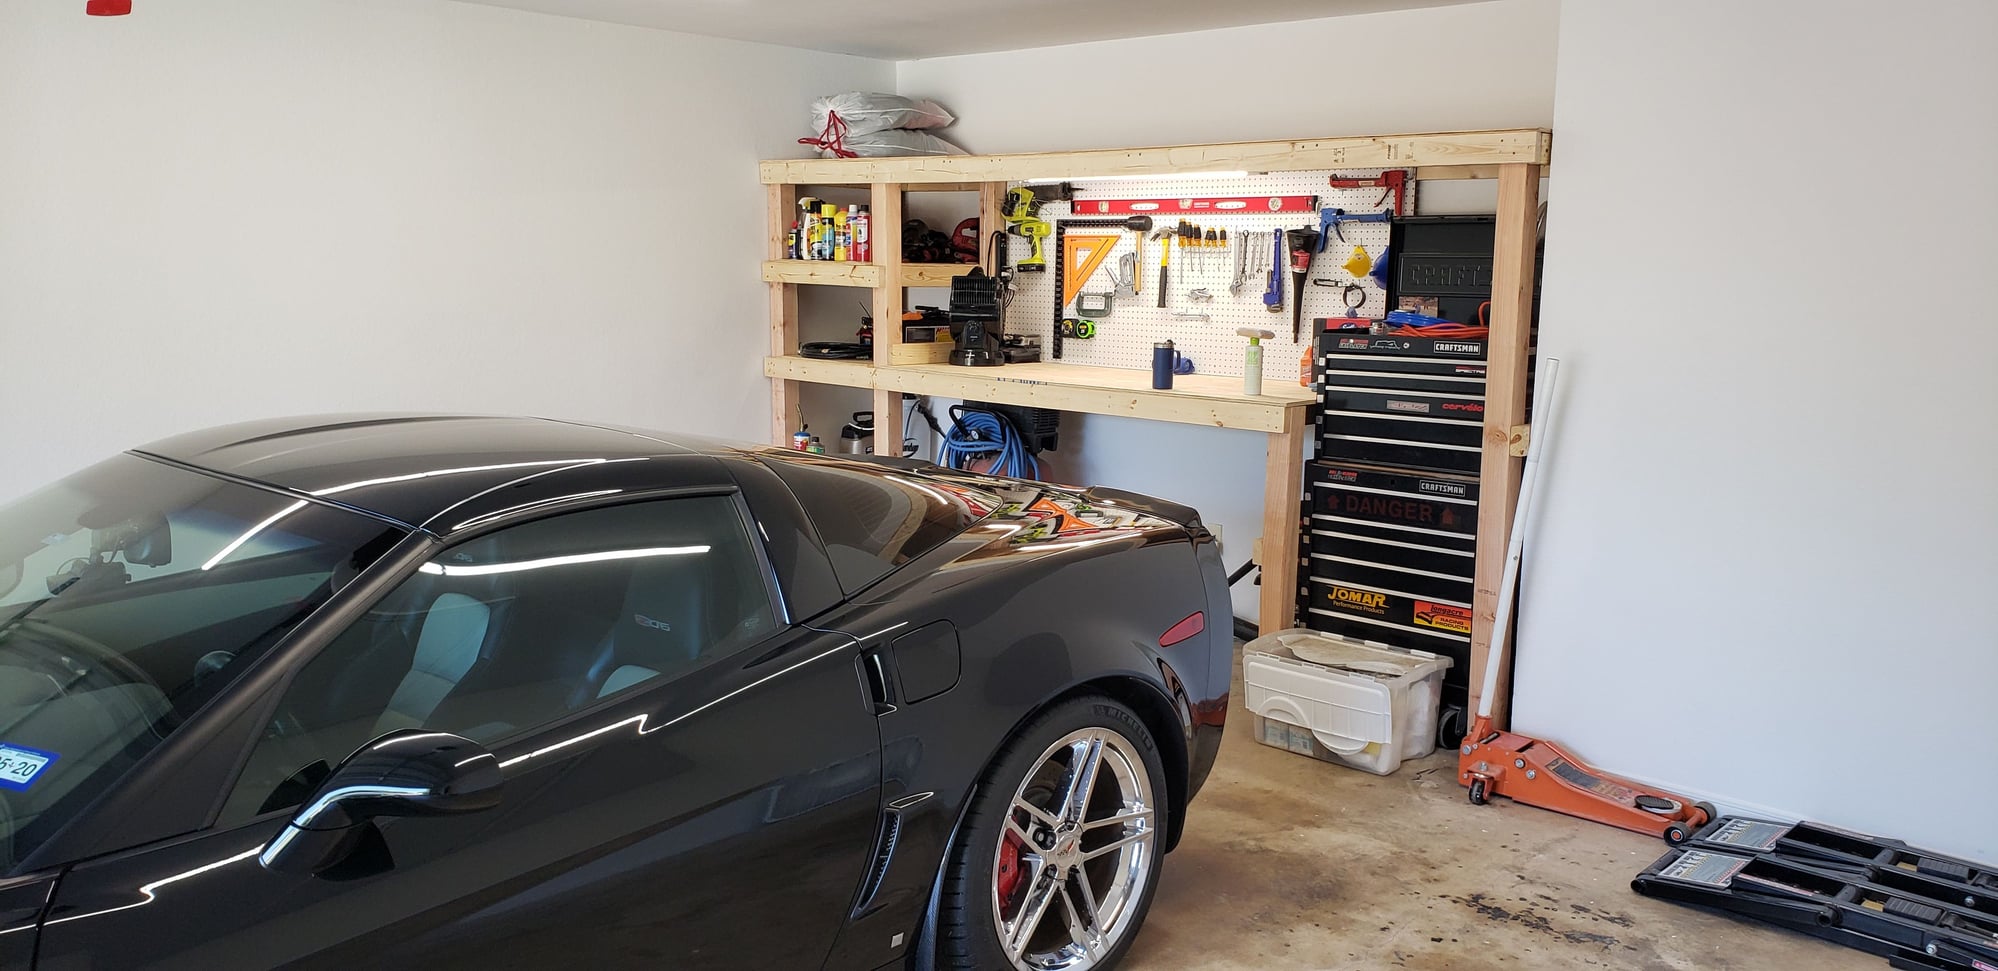 Garage DIY pressure washer station - CorvetteForum - Chevrolet Corvette  Forum Discussion